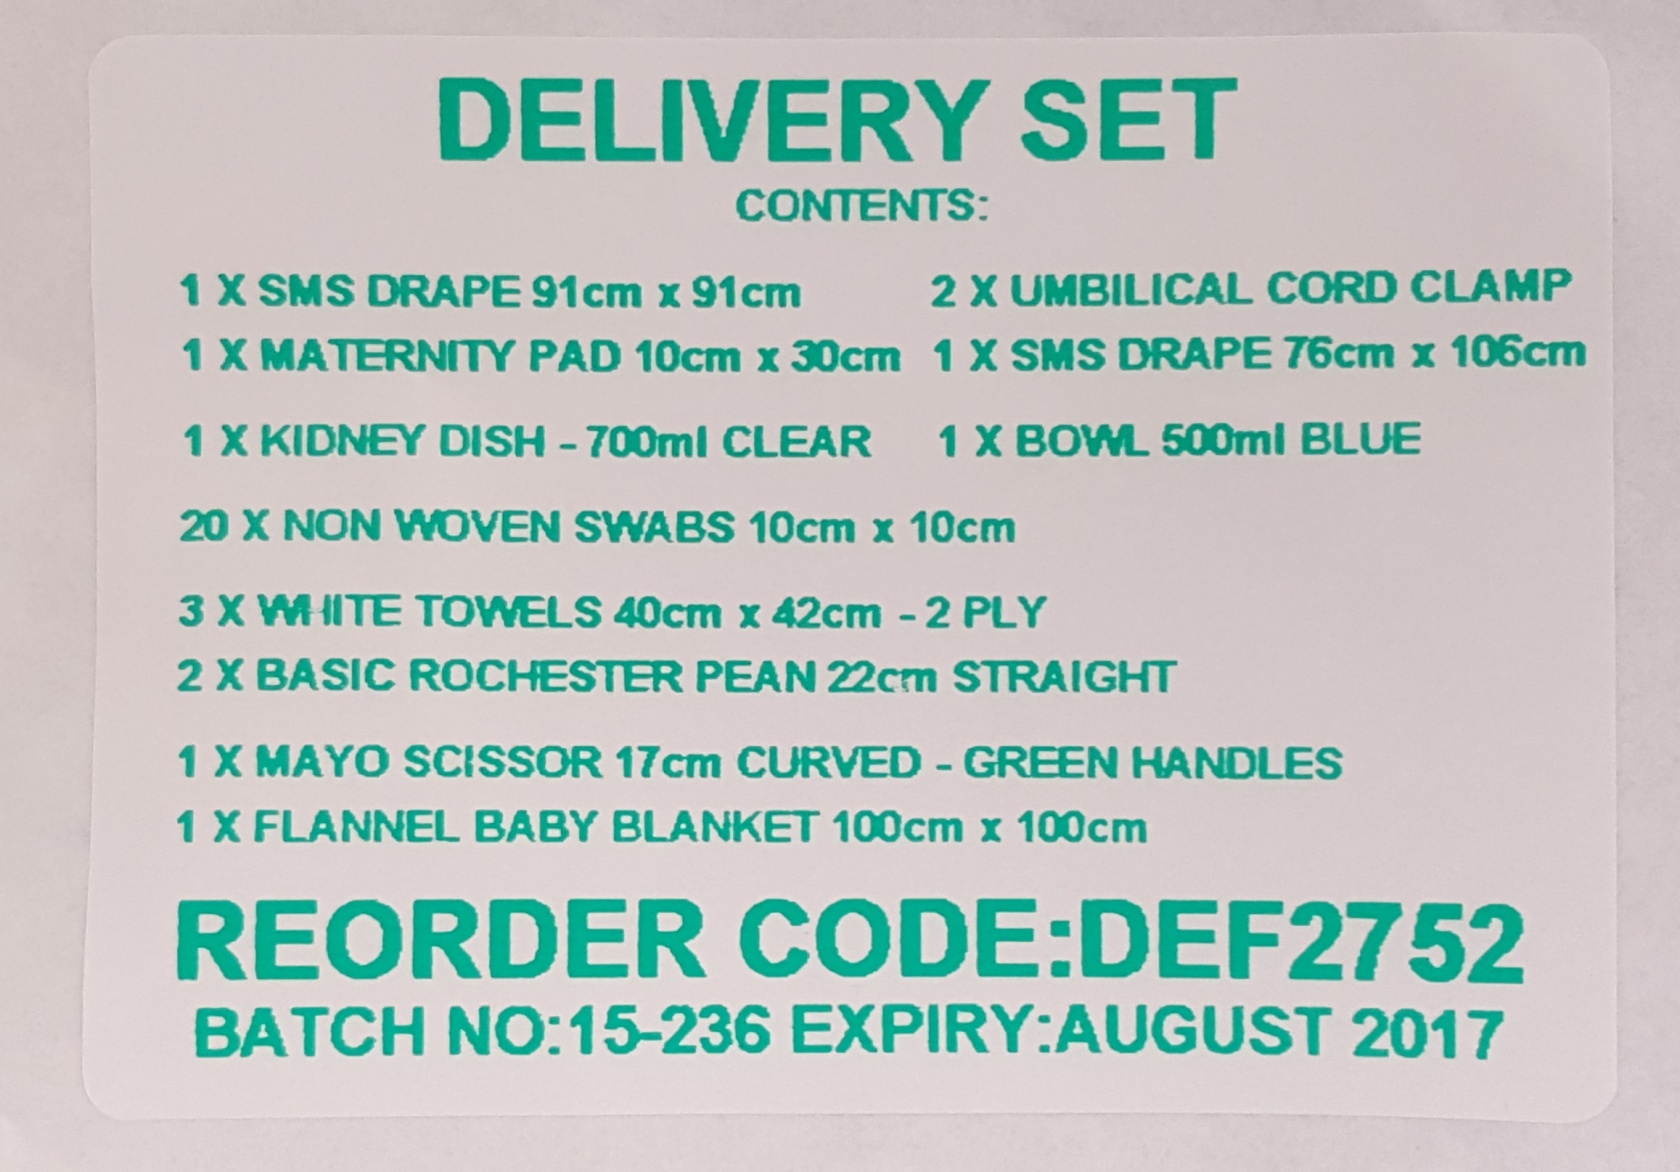 Delivery Set - Sterile